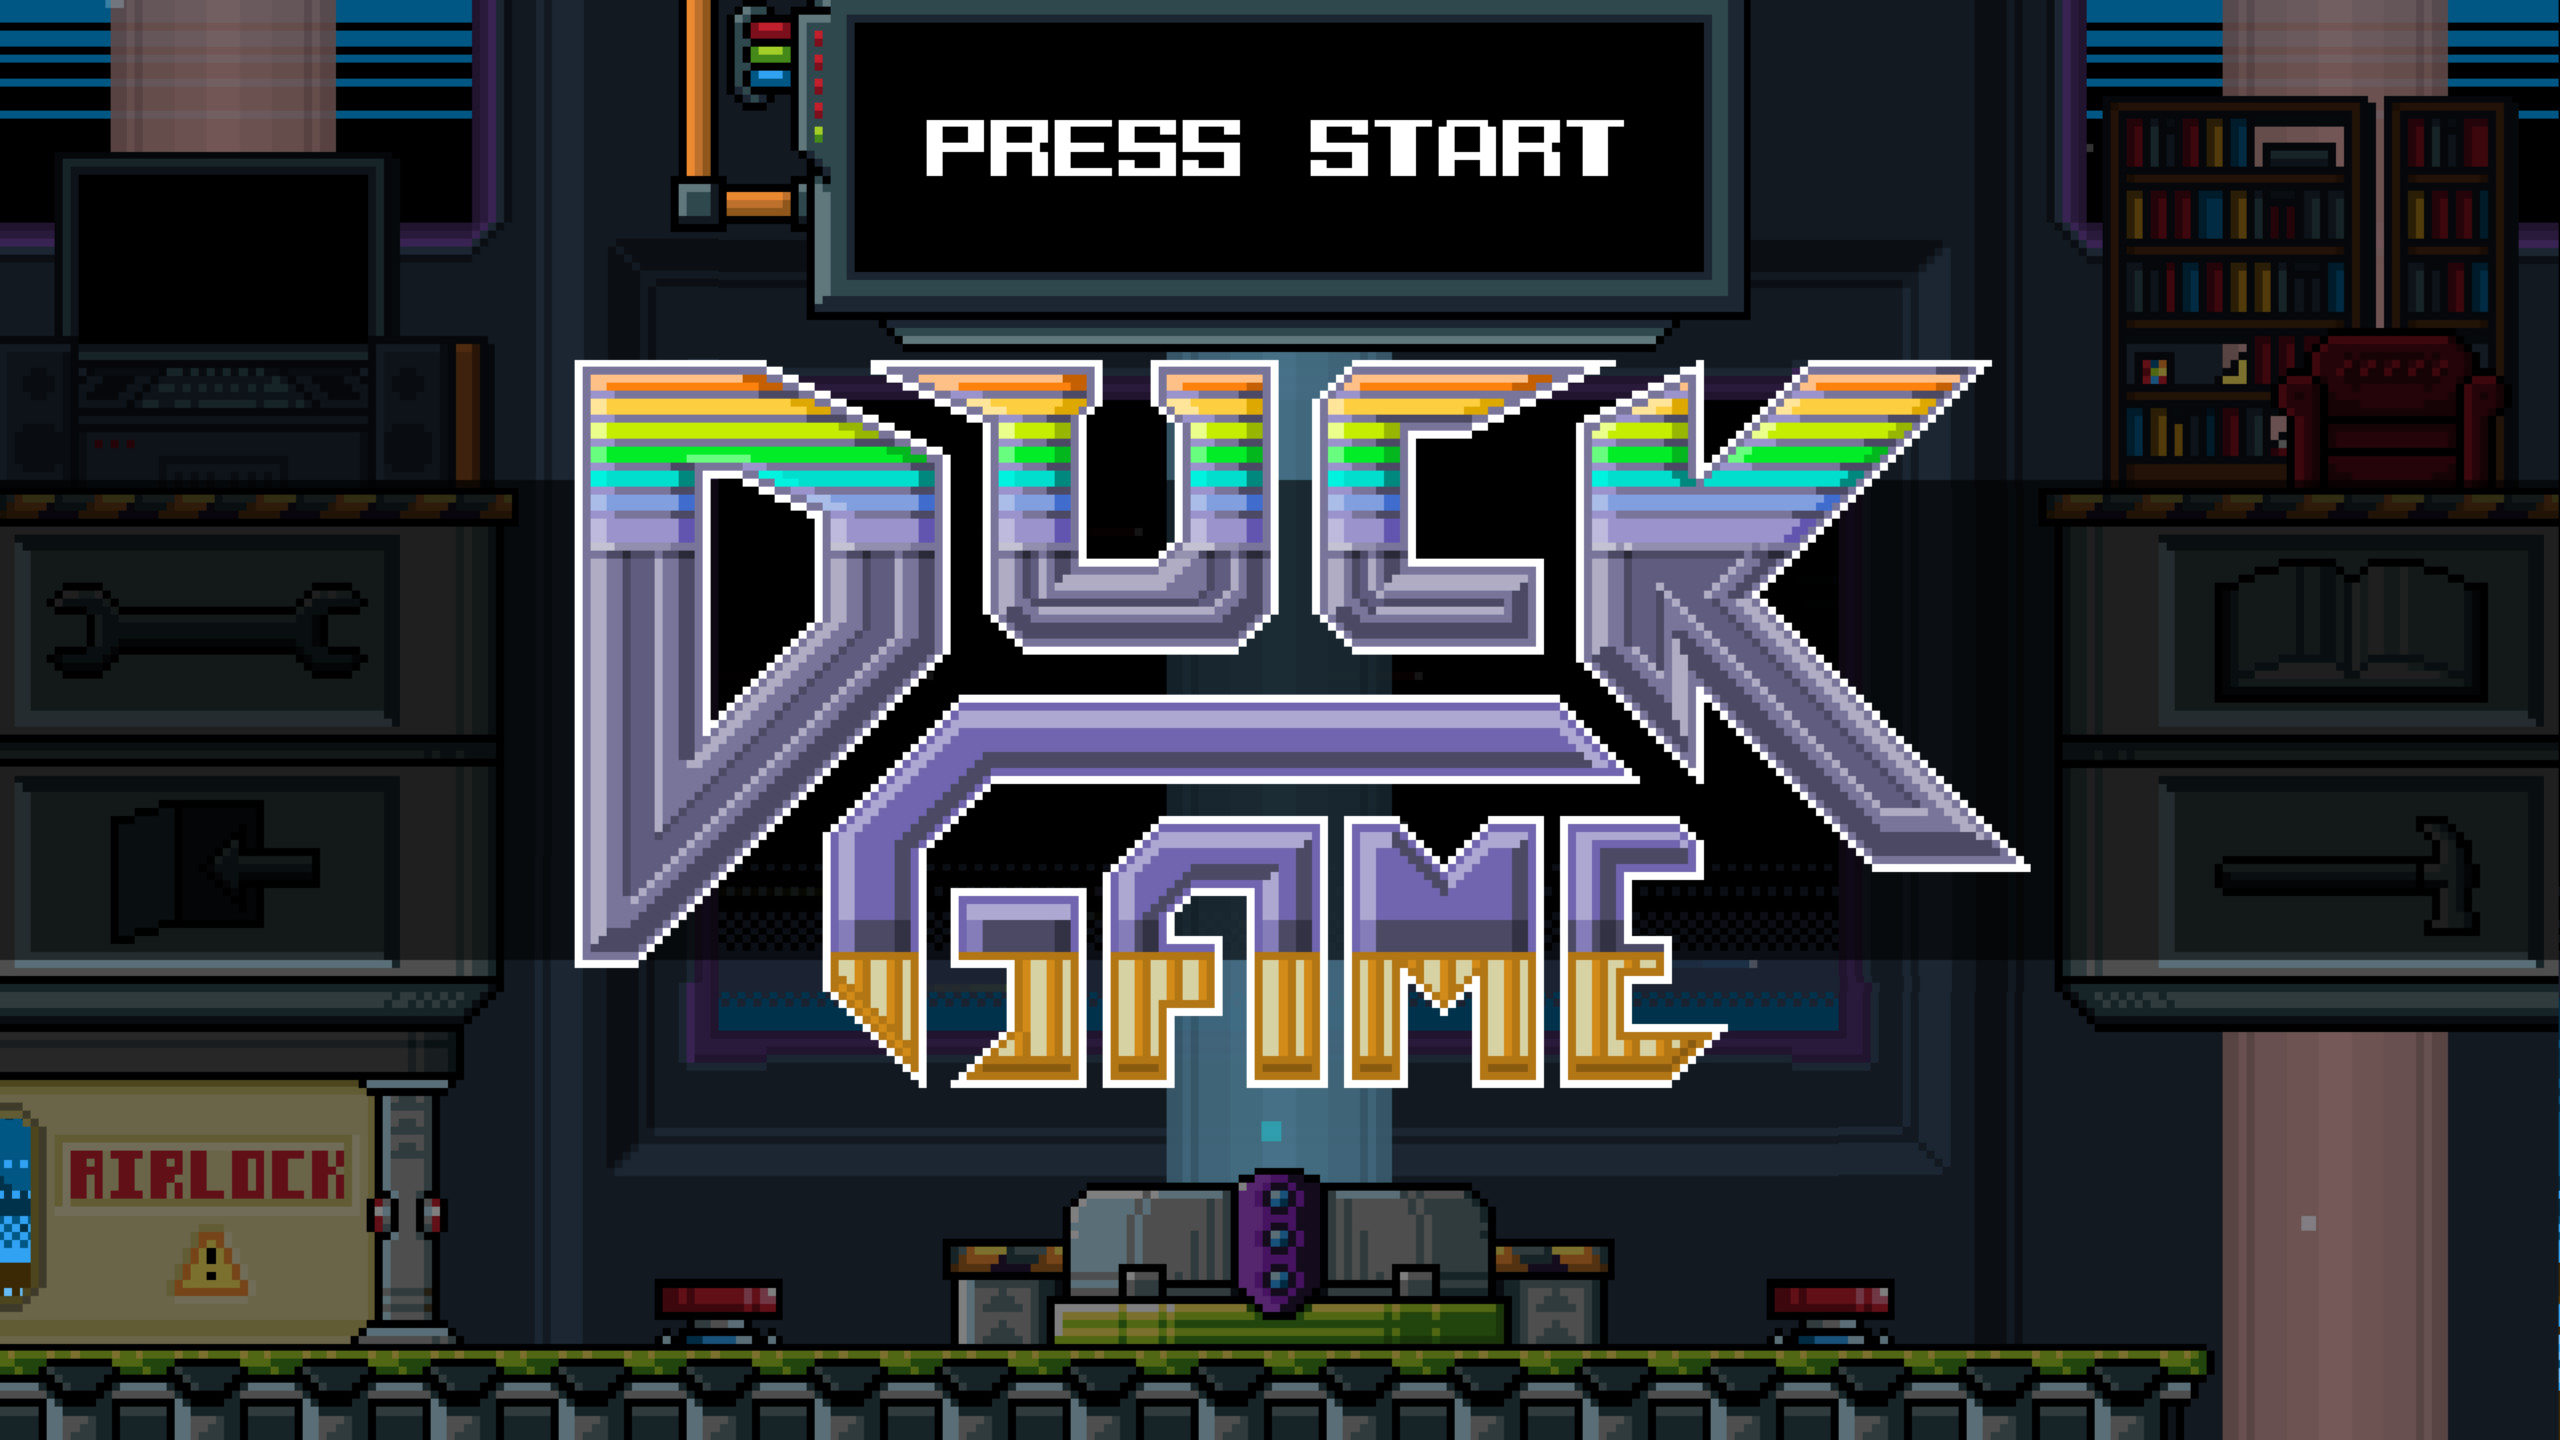 Duck Game on Steam